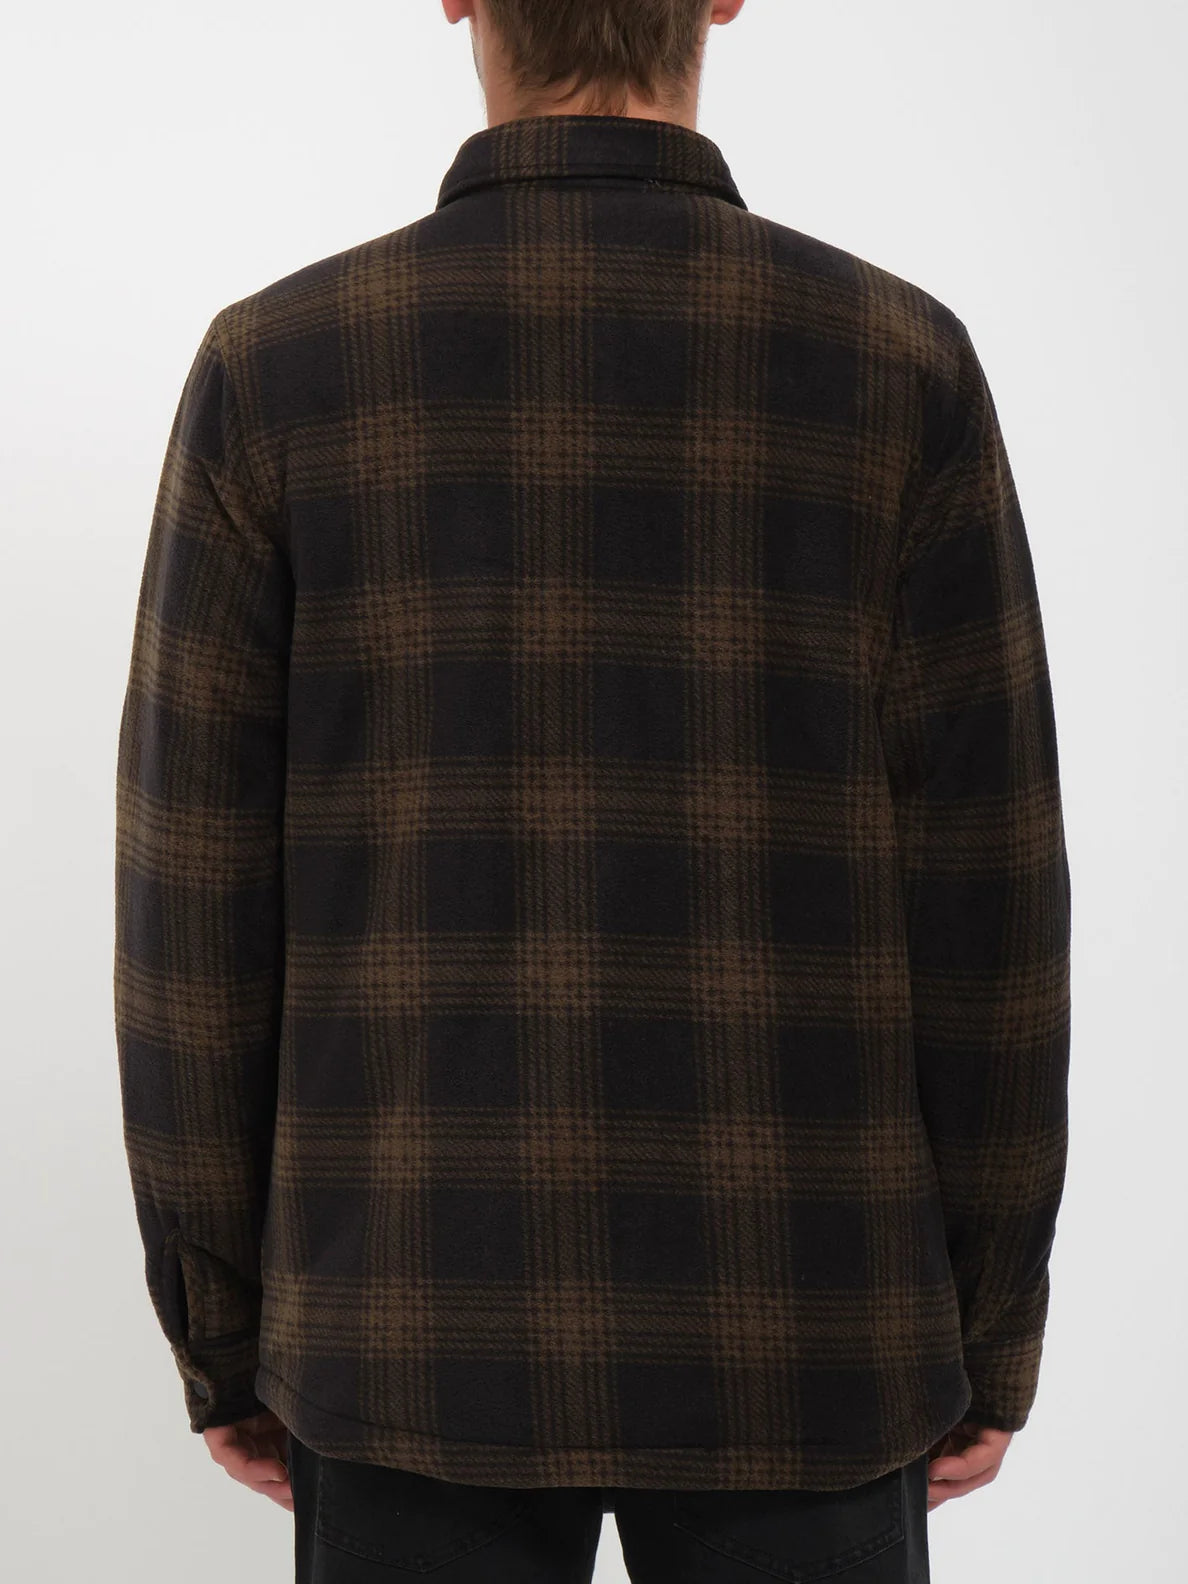 Volcom Brickstone Lined Flannel Lined Shirt - Bison